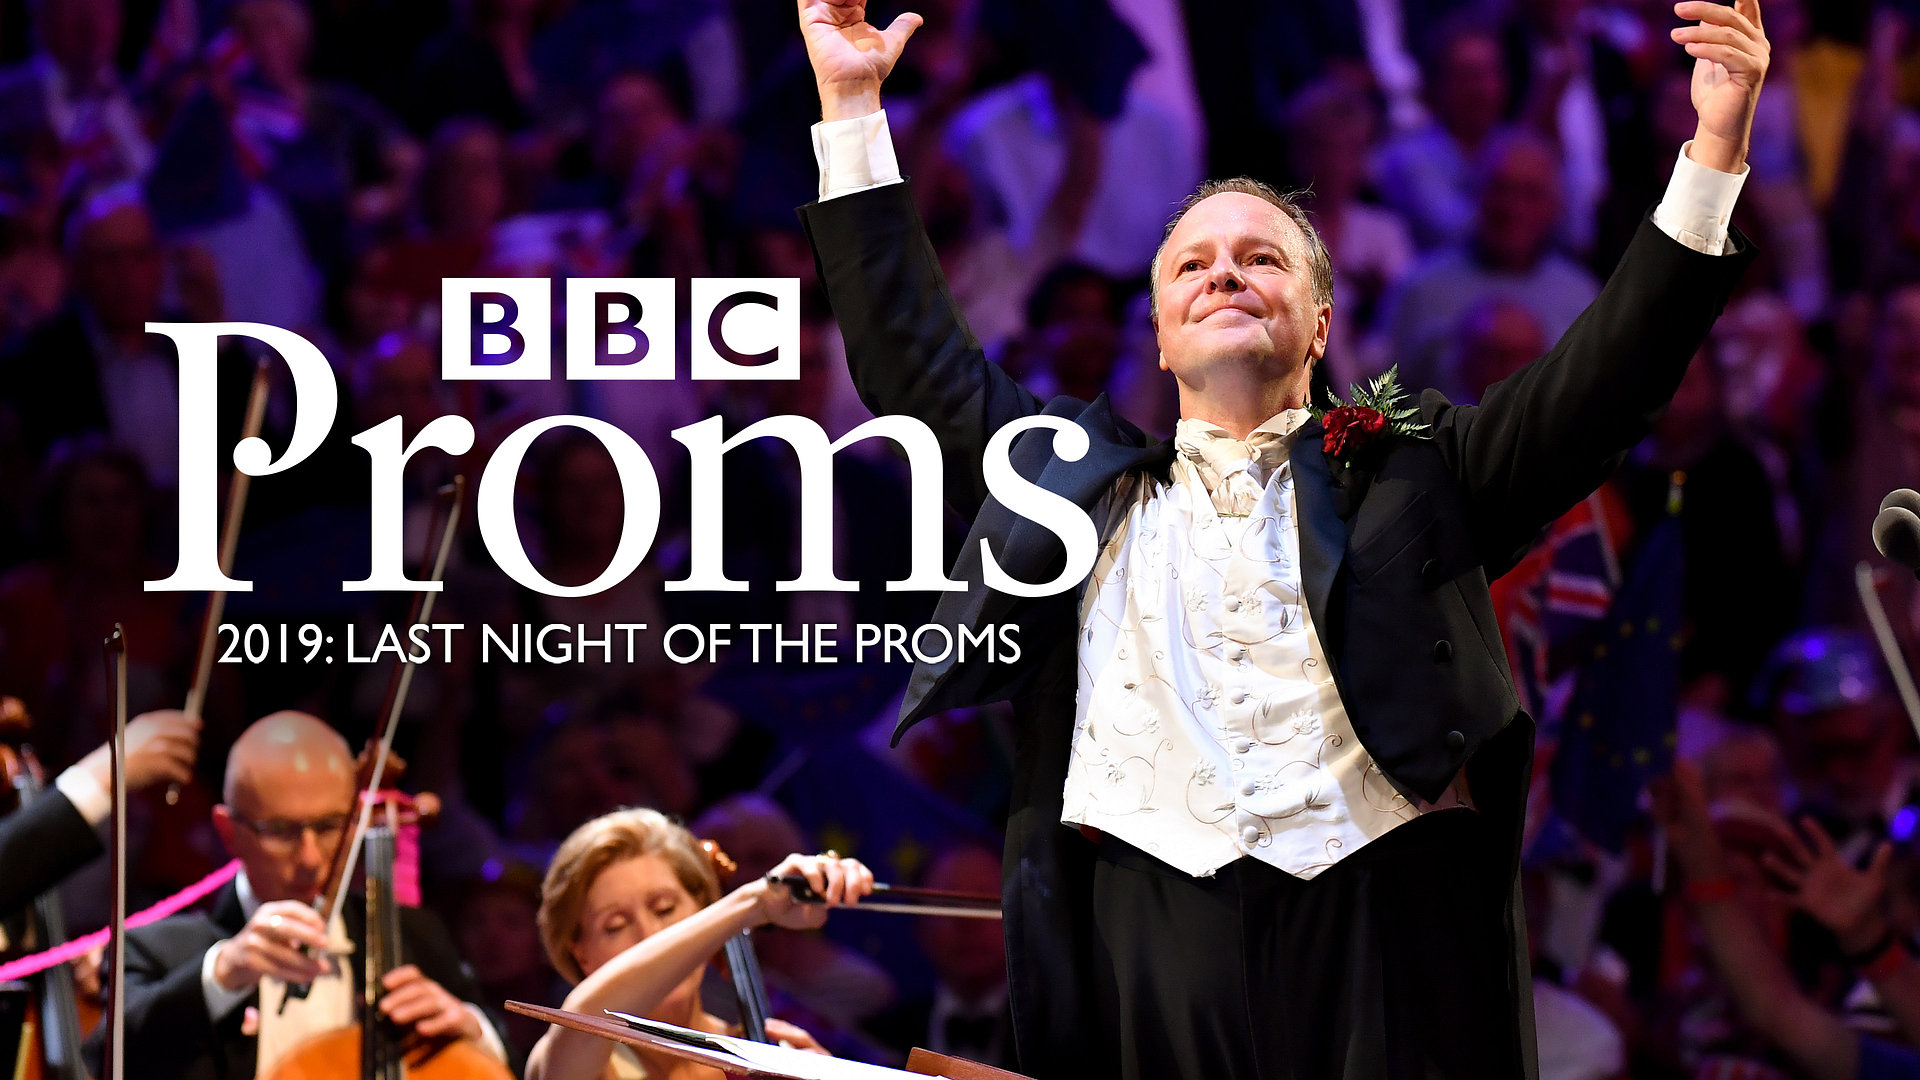 BBC Proms 2019: Last Night of the Proms